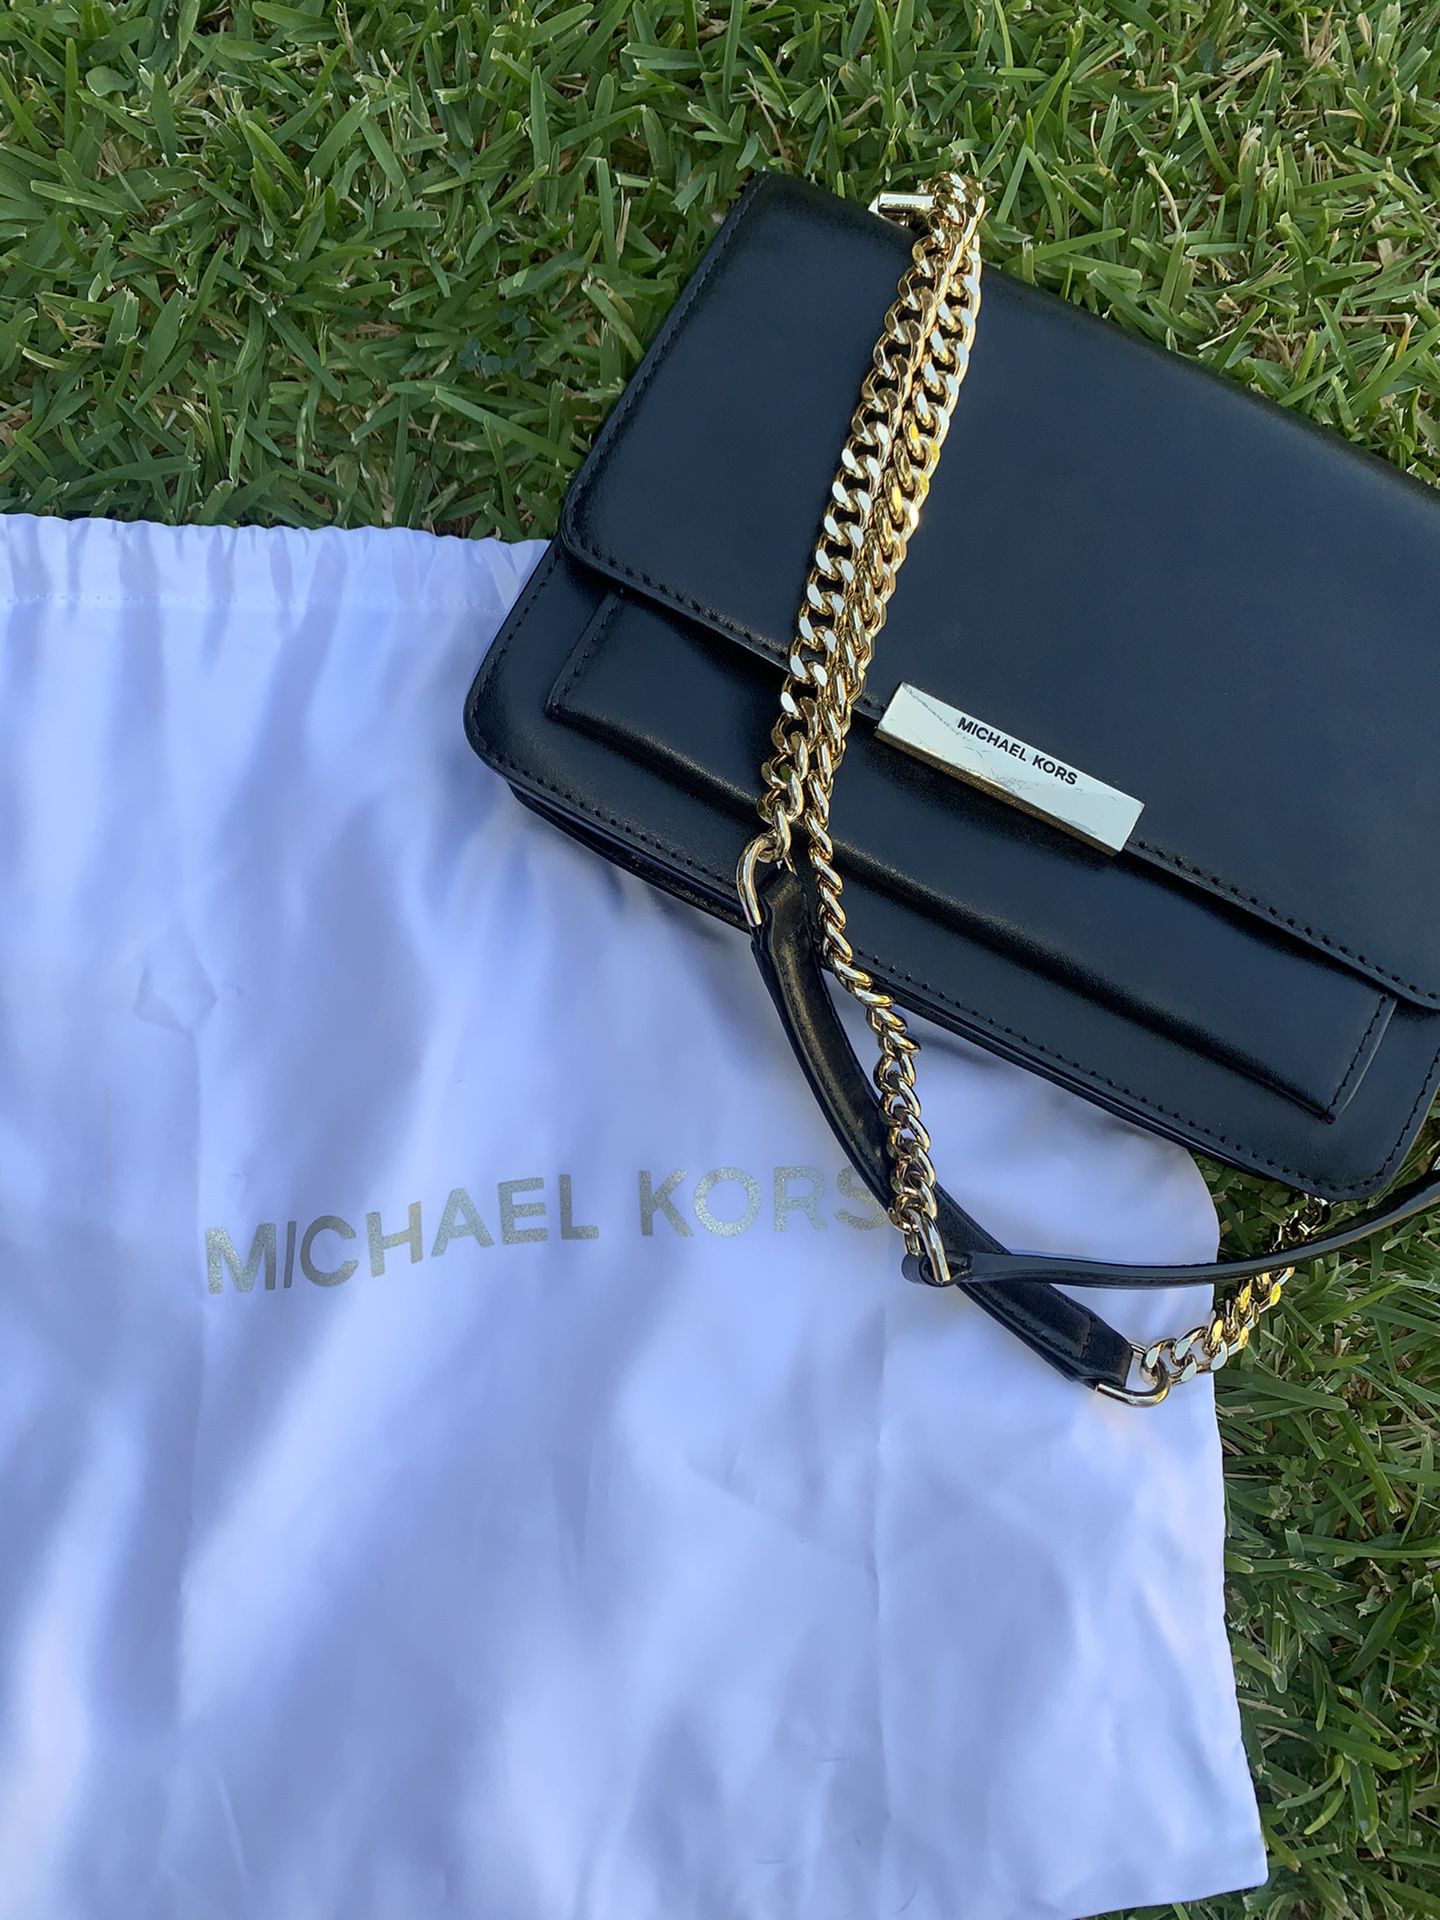 Michael kors jade shoulder bag